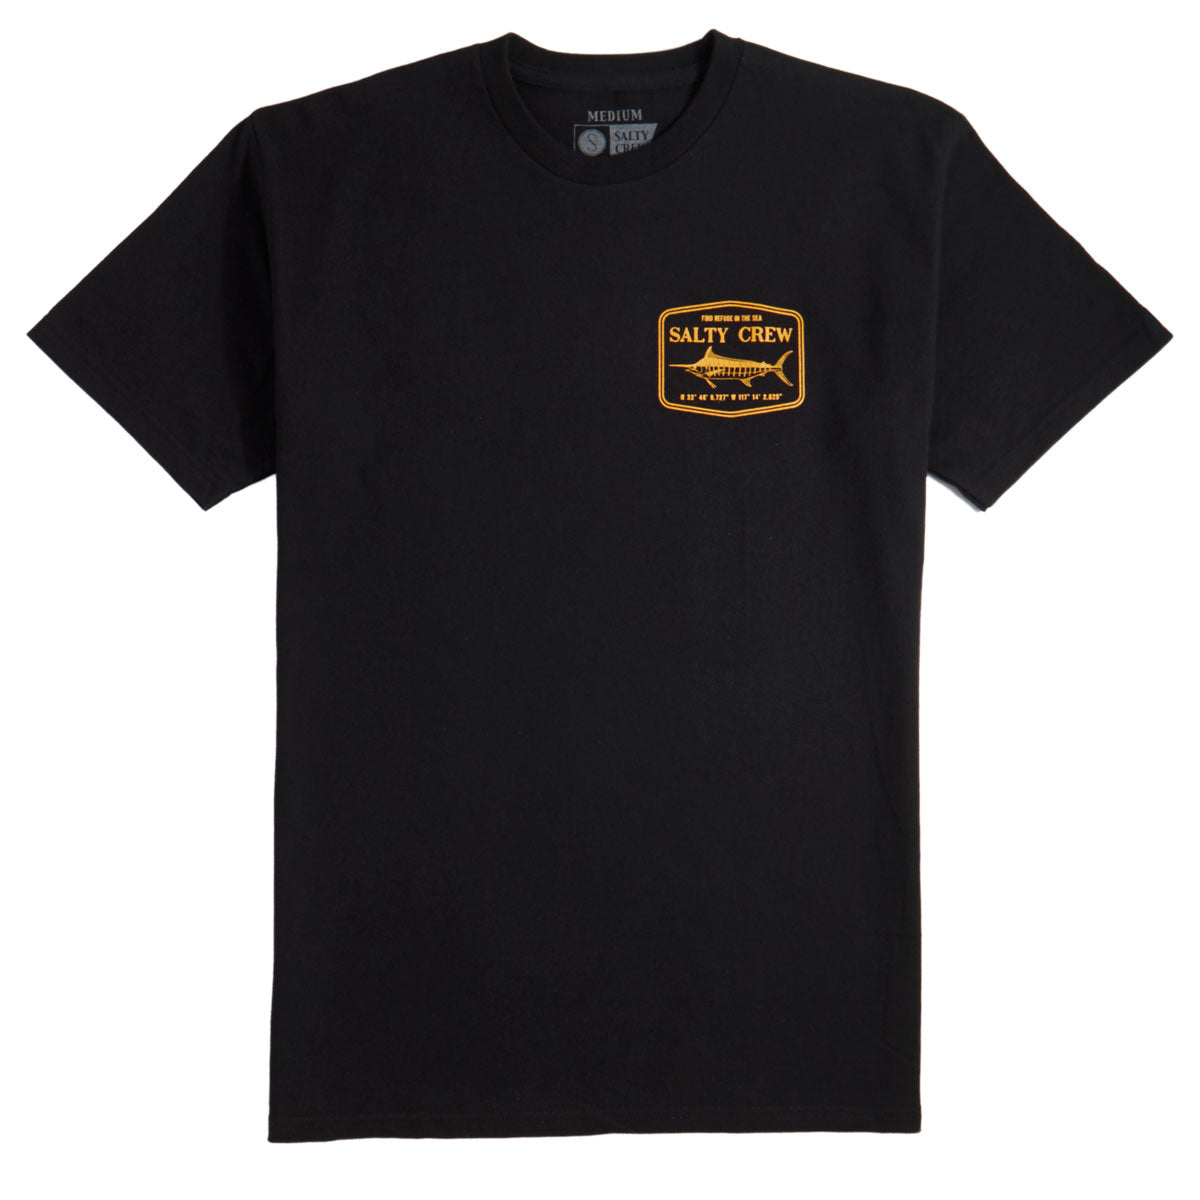 Salty Crew Stealth T-Shirt - Black image 1